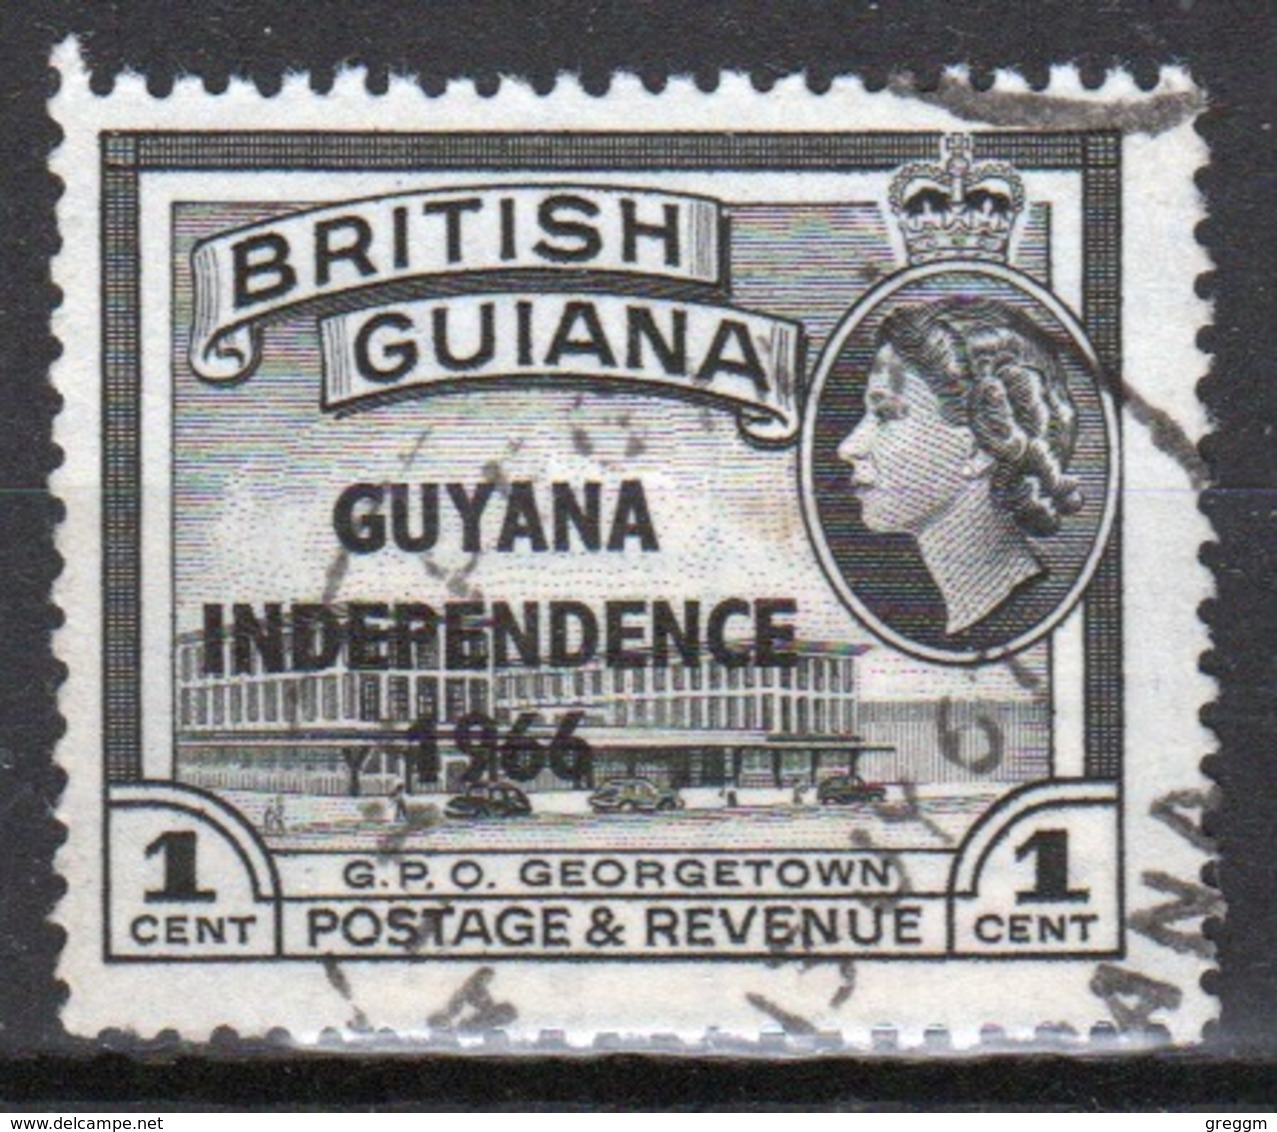 Guyana 1966 Single 1c Stamp From The British Guiana Definitive Series Overprinted For Guyana. - Guyana (1966-...)